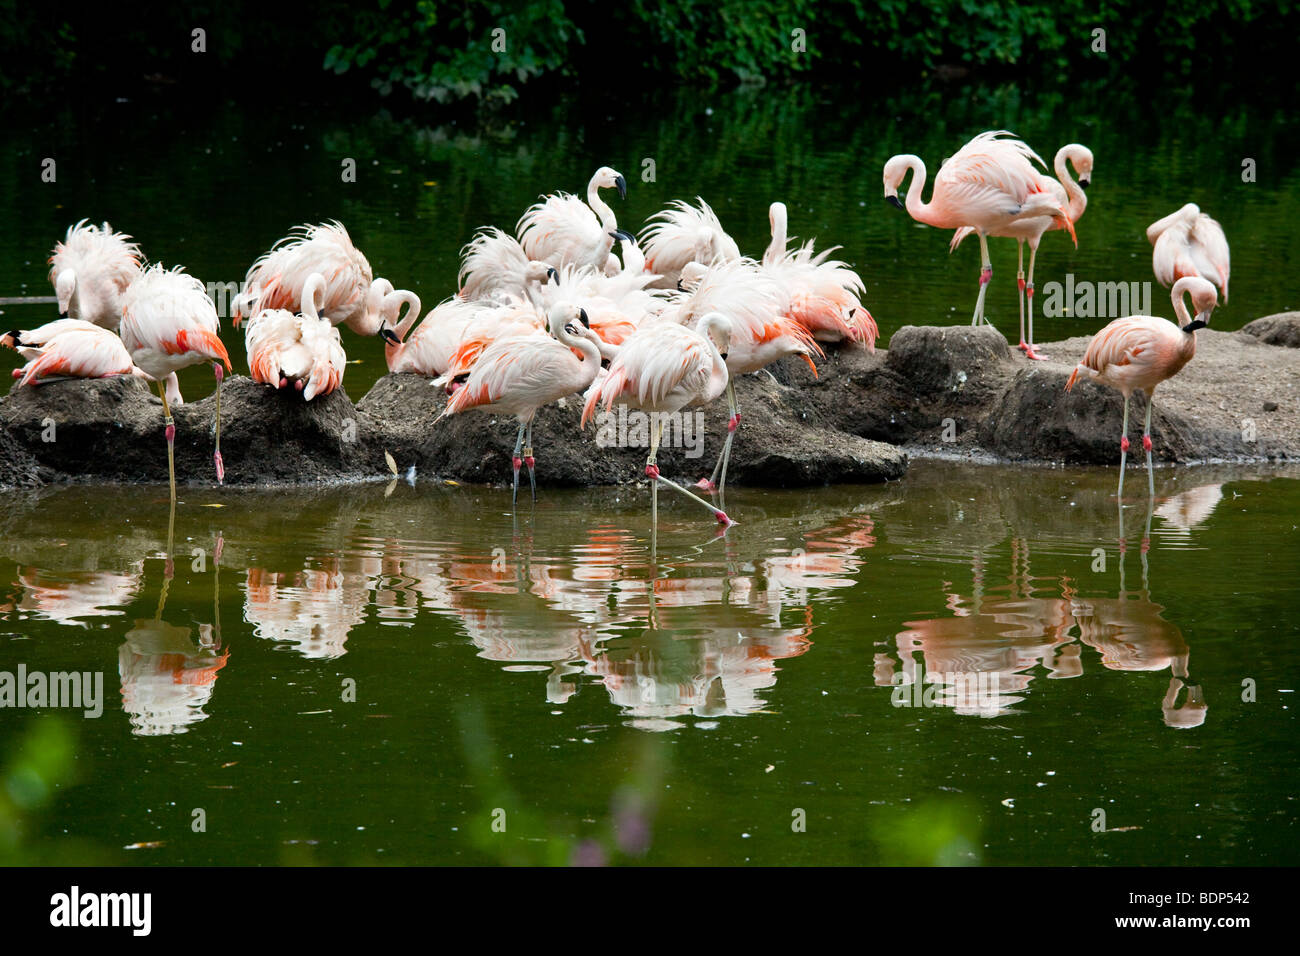 Flamingos at the Bronx Zoo in New York City Stock Photo - Alamy